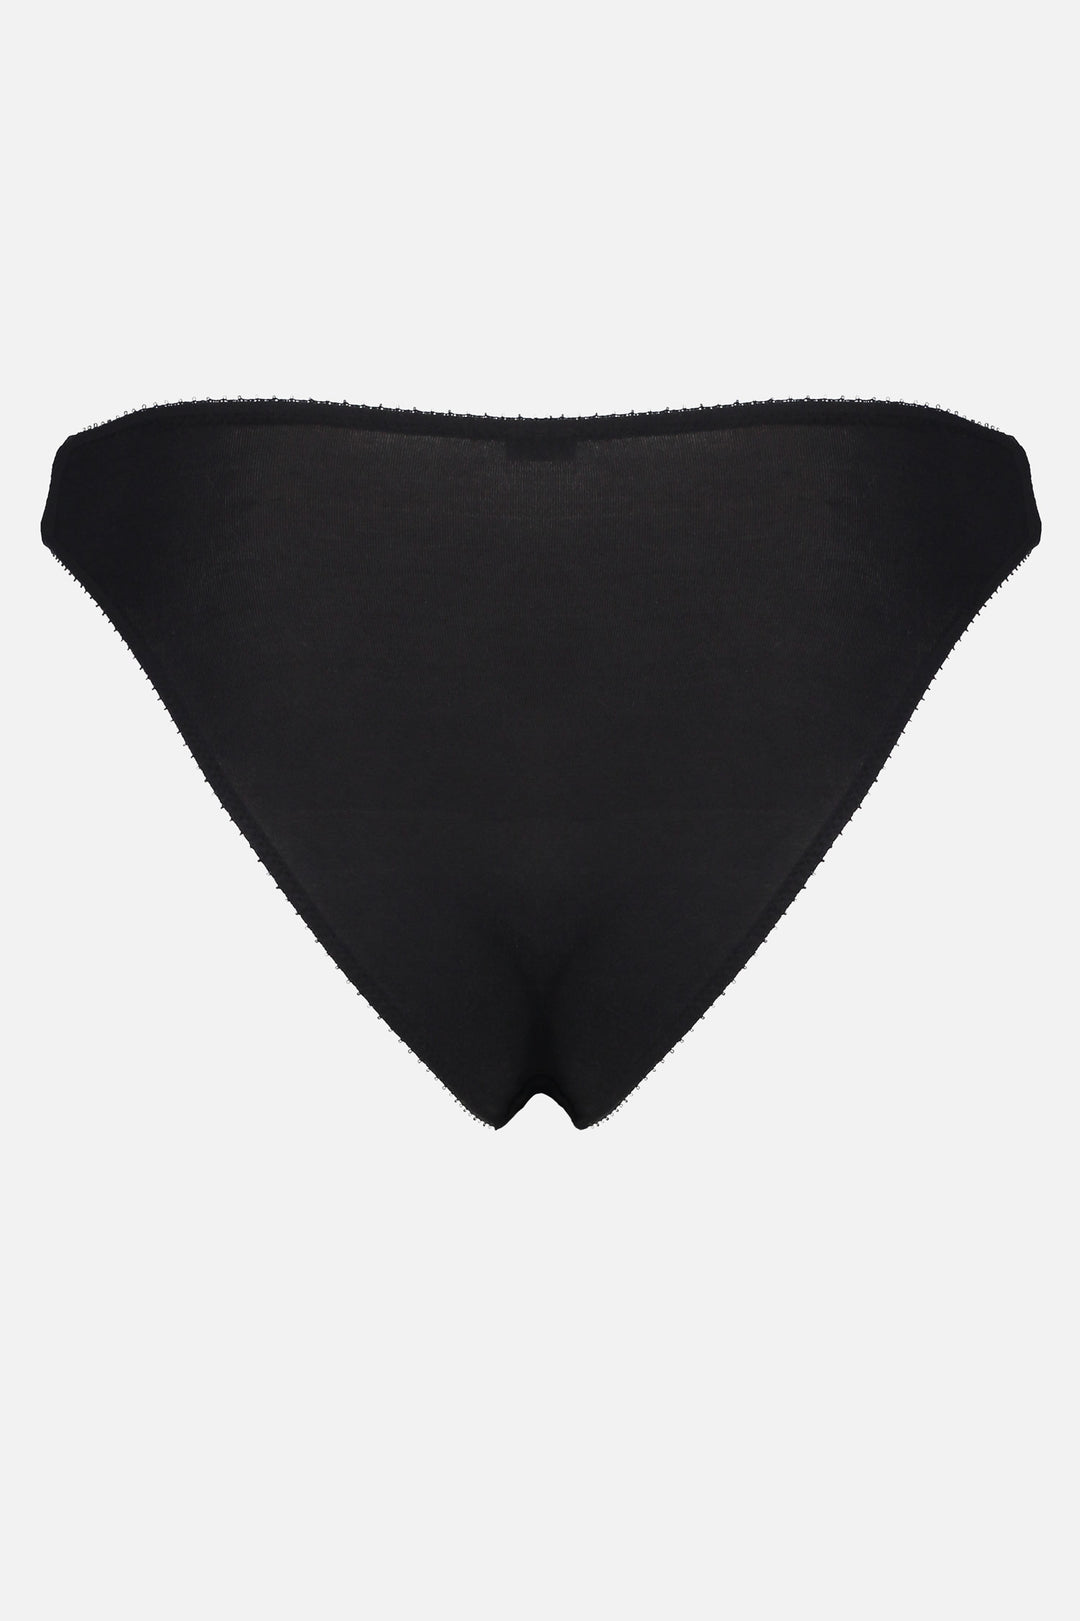 Videris Lingerie bikini knicker in black blossom embroidered TENCEL™  mid-rise style with a flattering legline